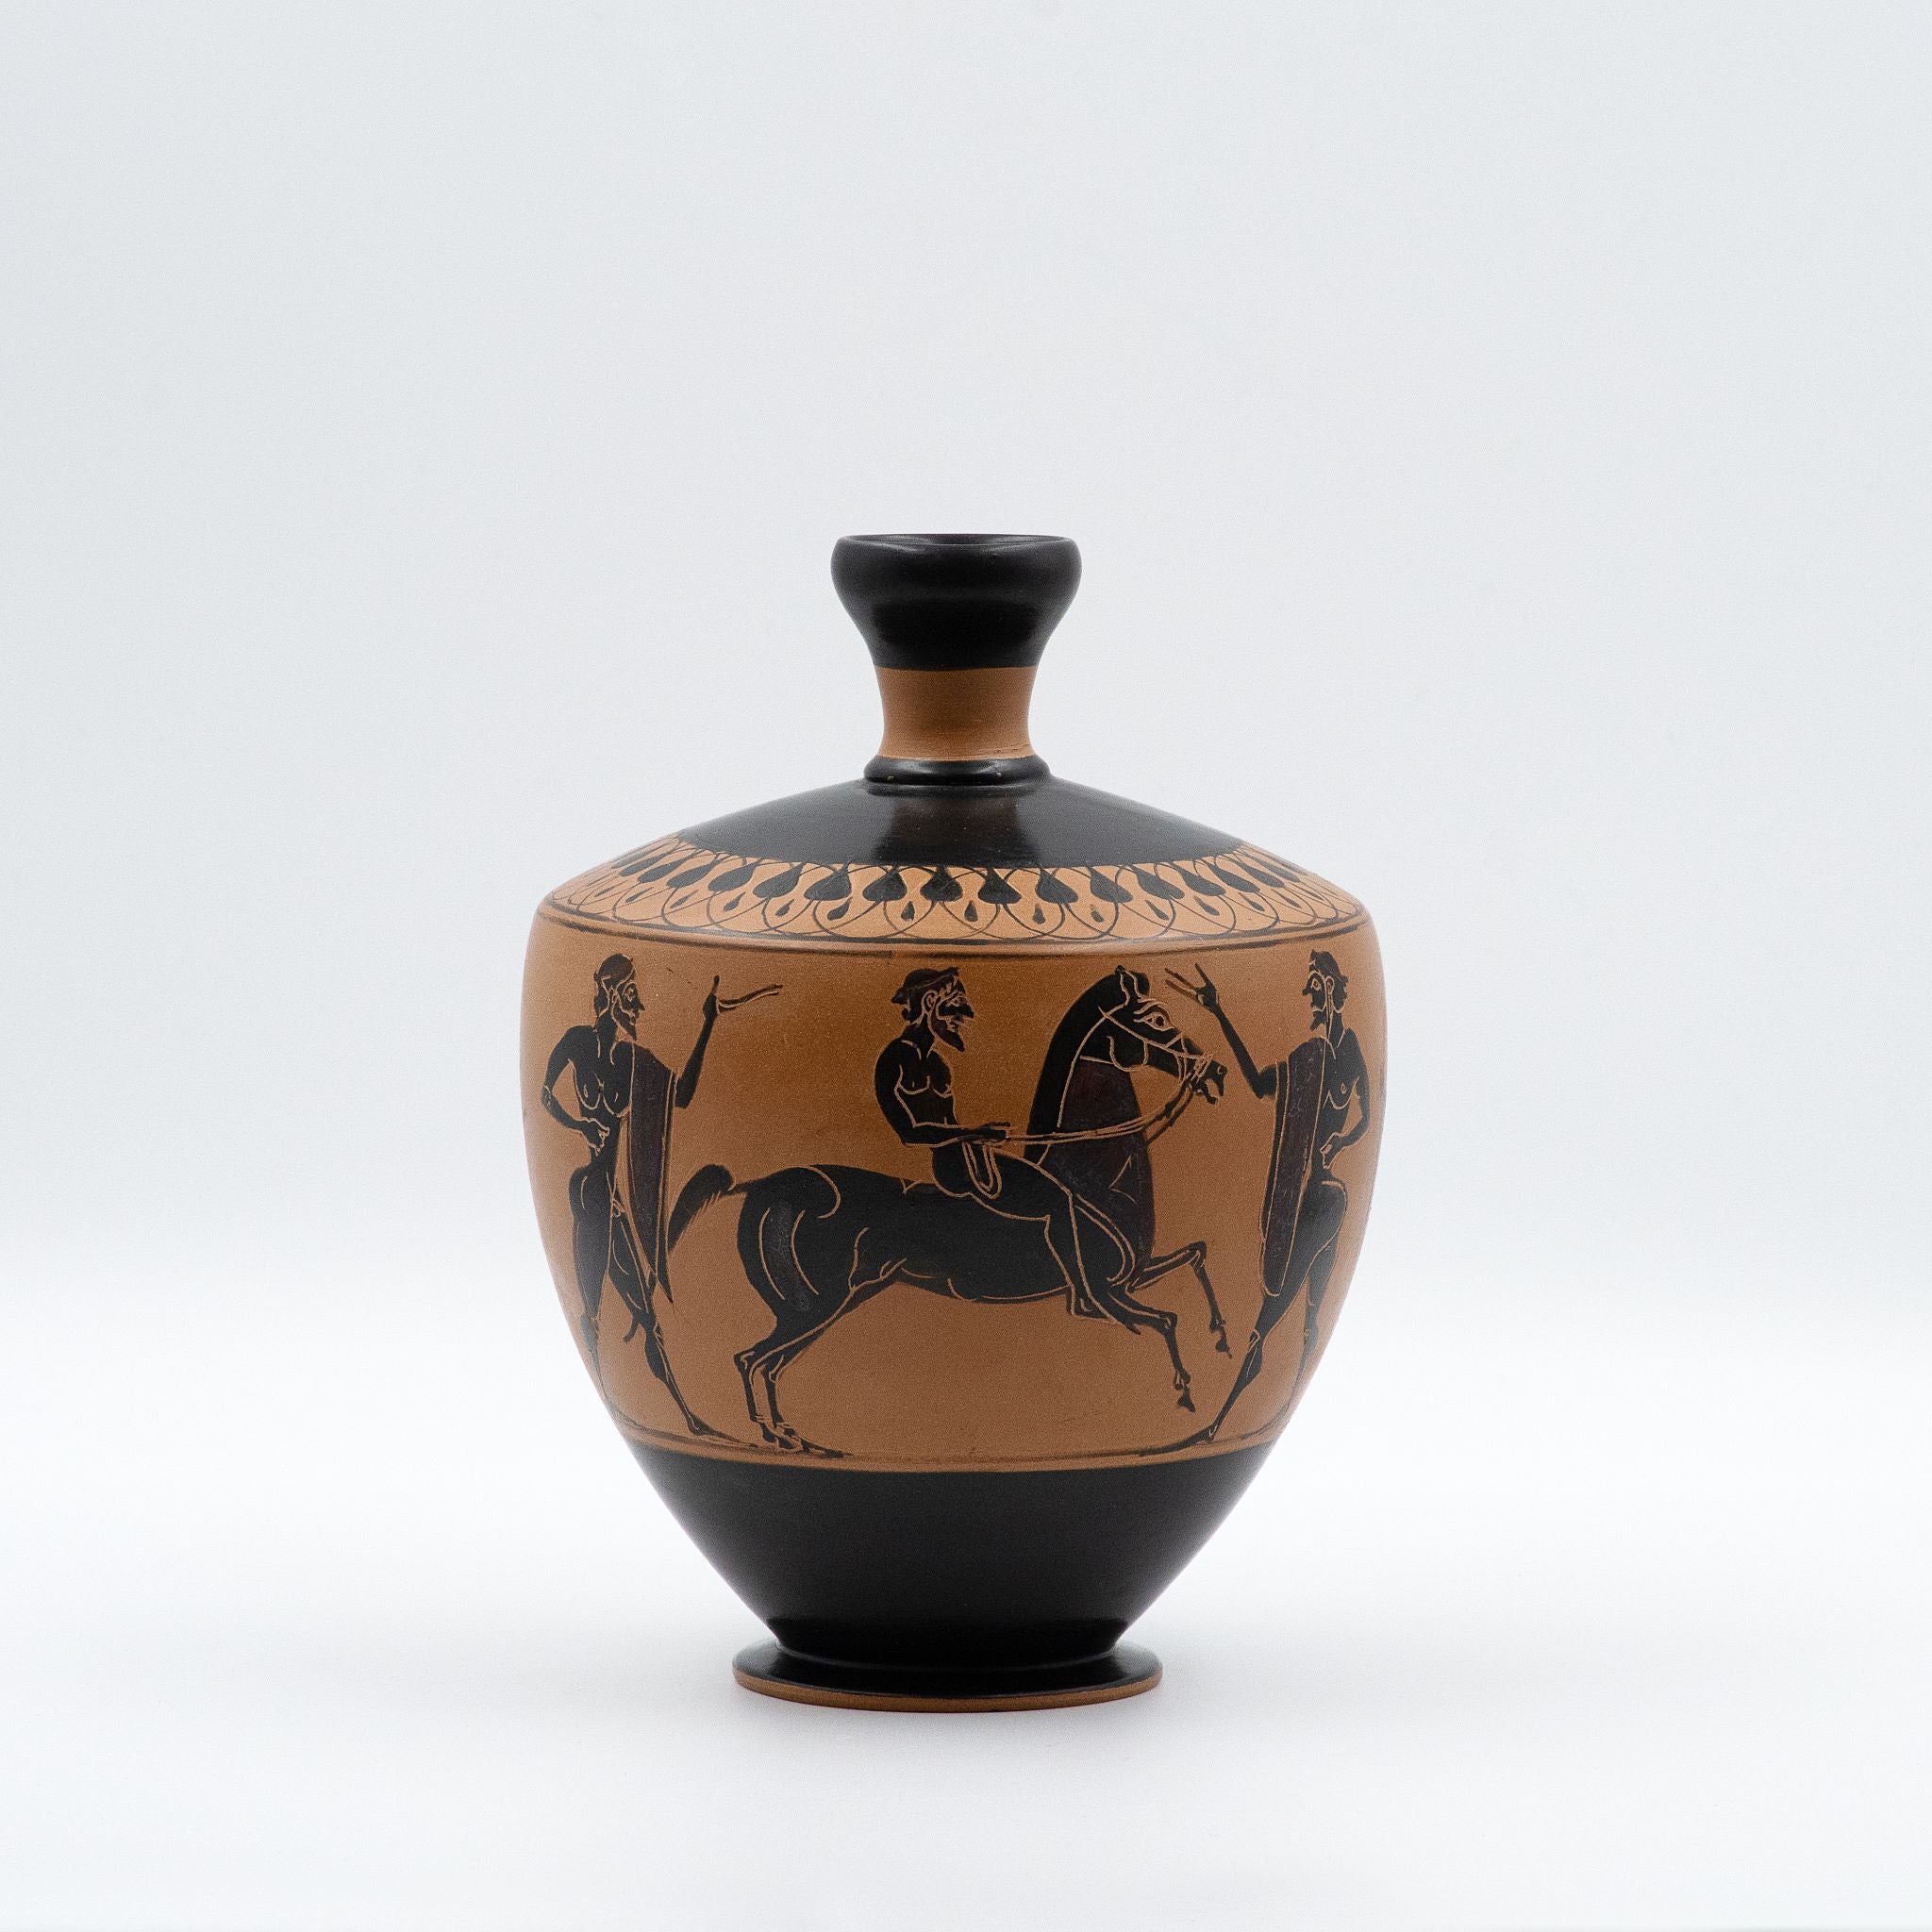 Black figure lekythos with a rider